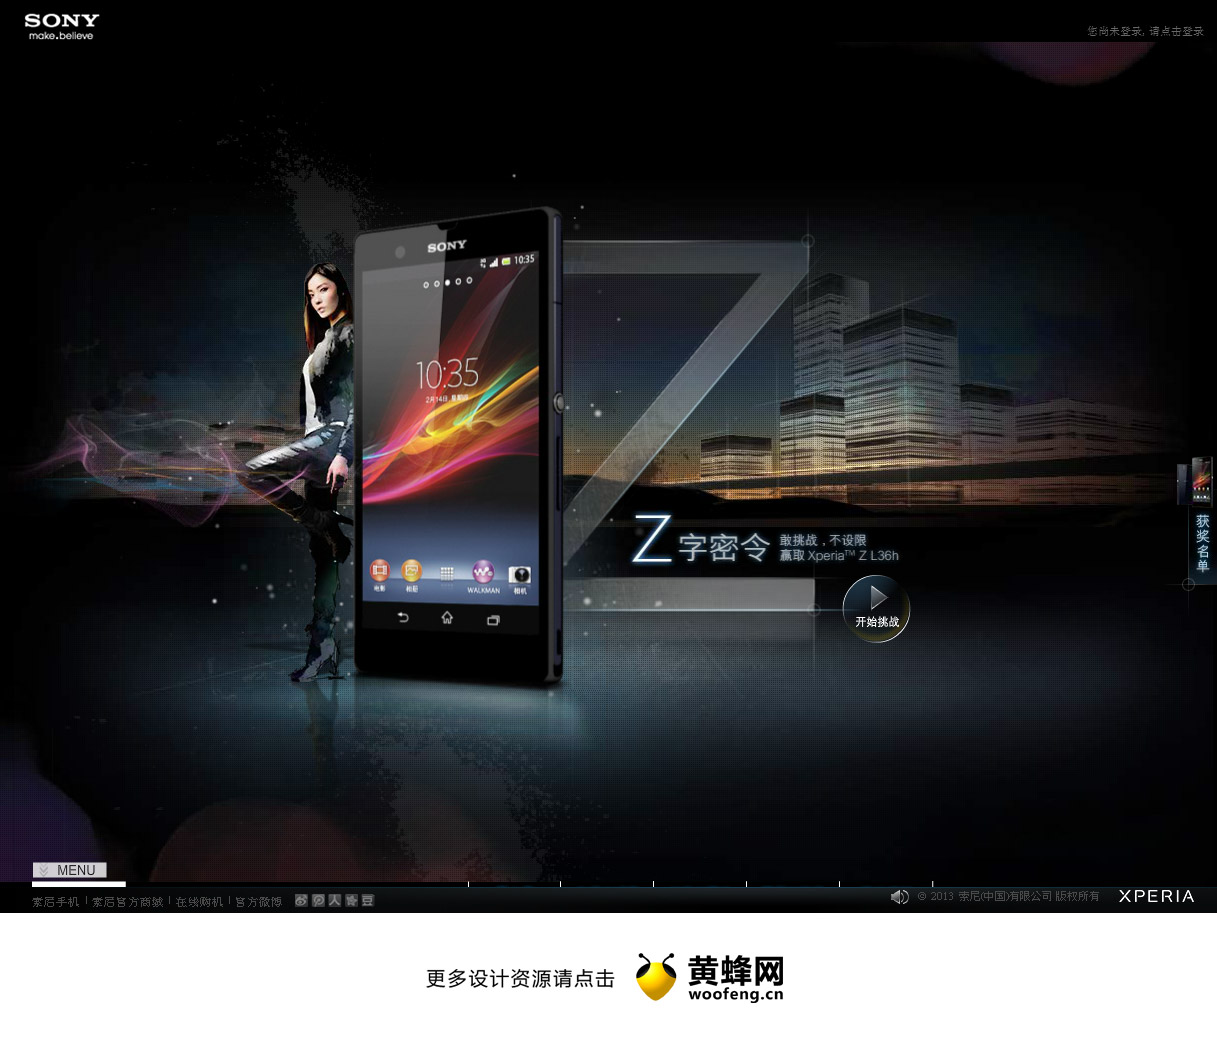 SONY Xperia Z数码产品网站，来源自黄蜂网https://woofeng.cn/web/